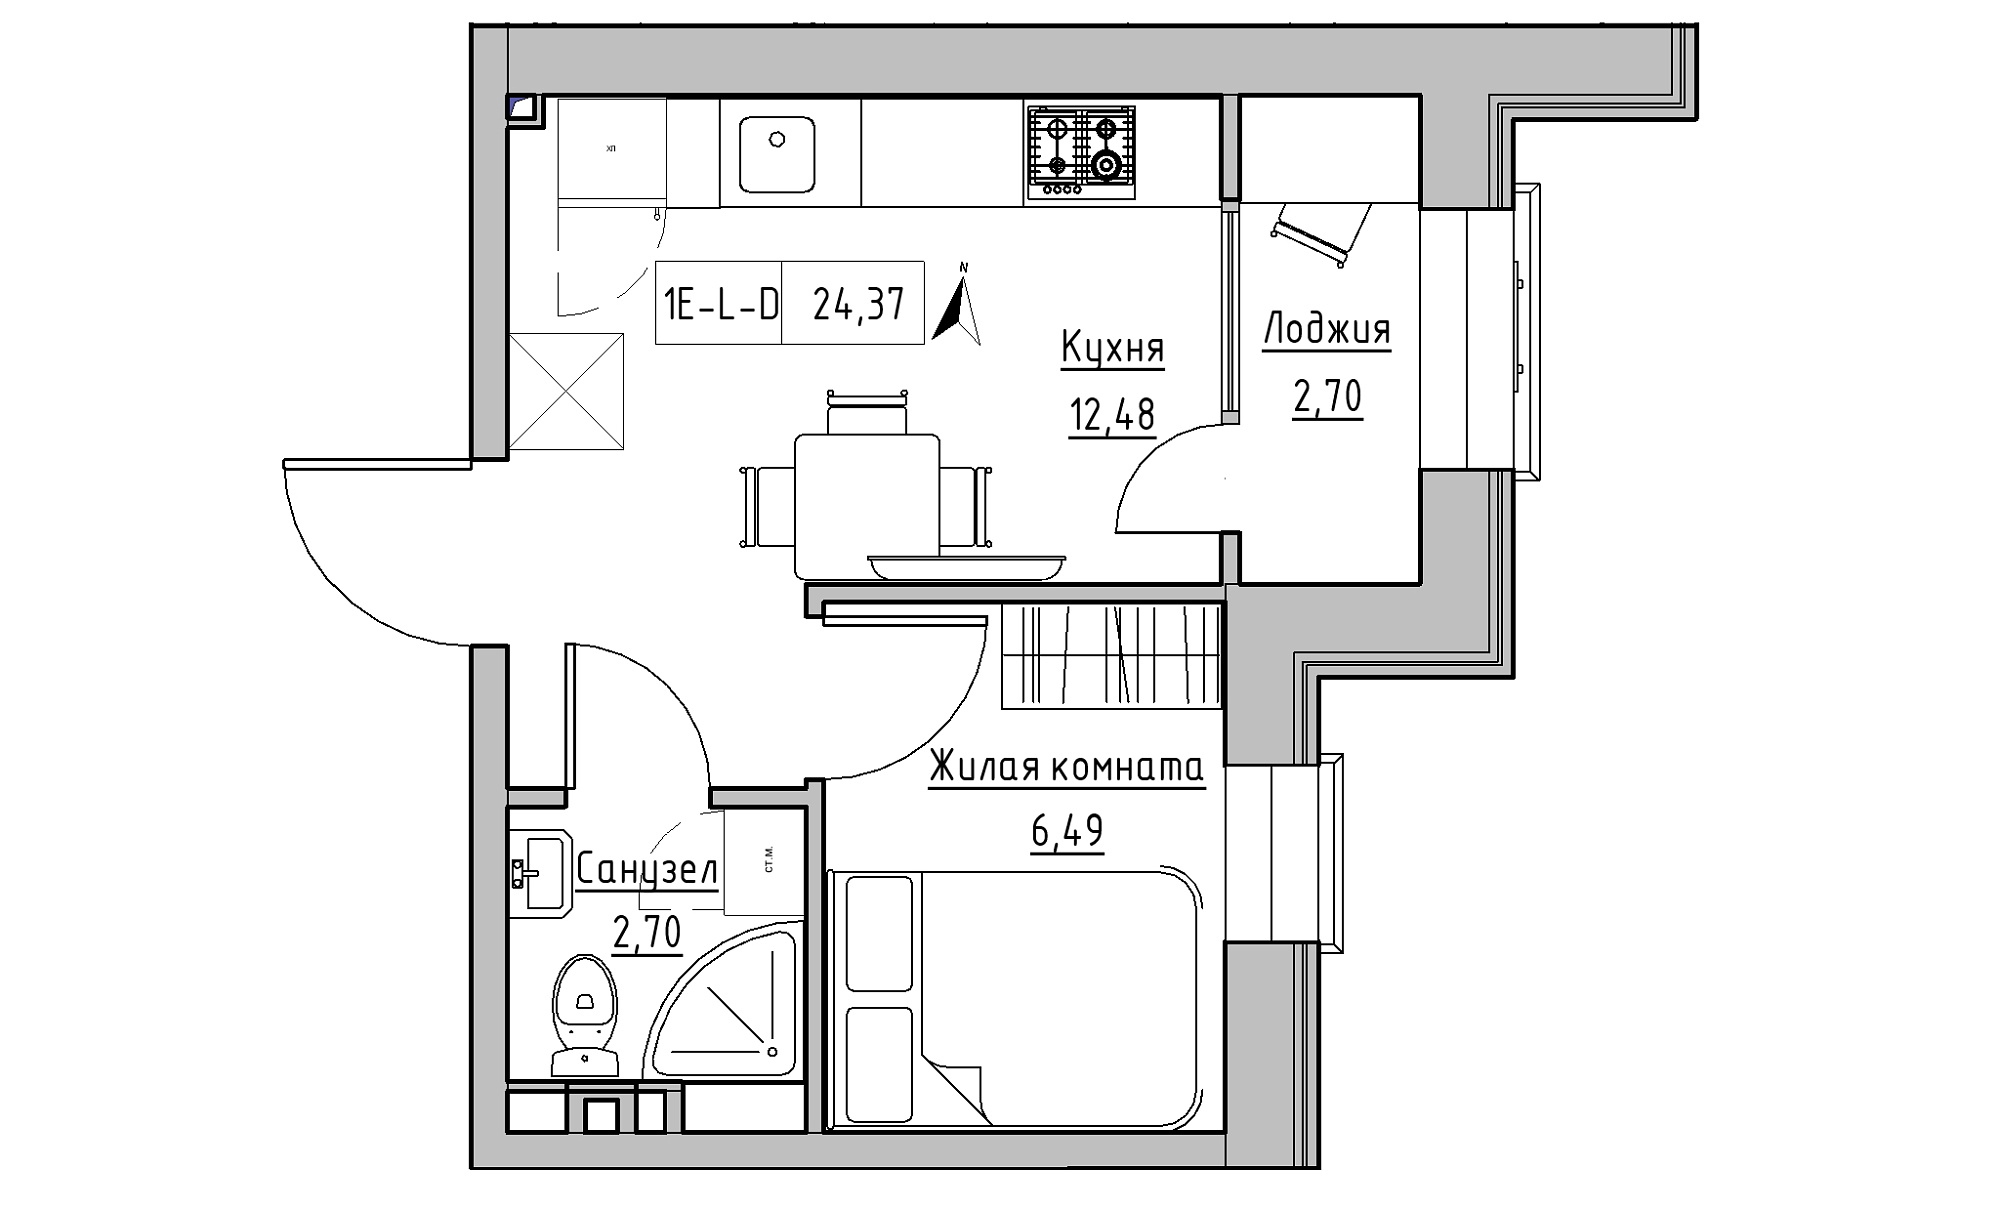 Planning 1-rm flats area 24.37m2, KS-016-04/0015.